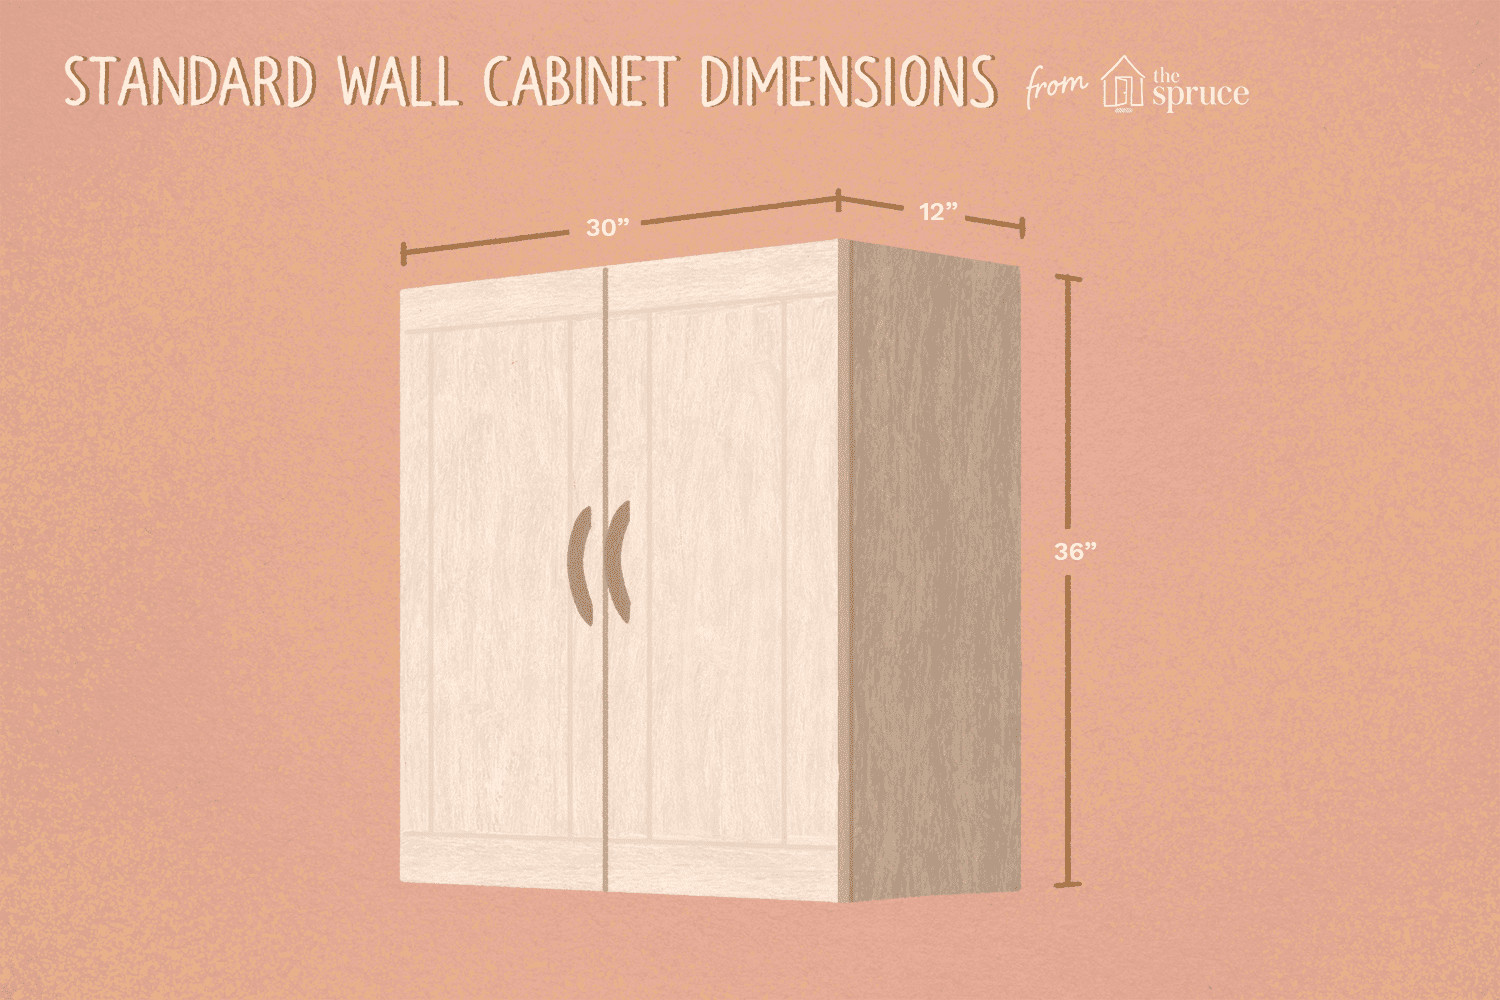 Standard Kitchen Cabinet Depths
 Guide to Standard Kitchen Cabinet Dimensions